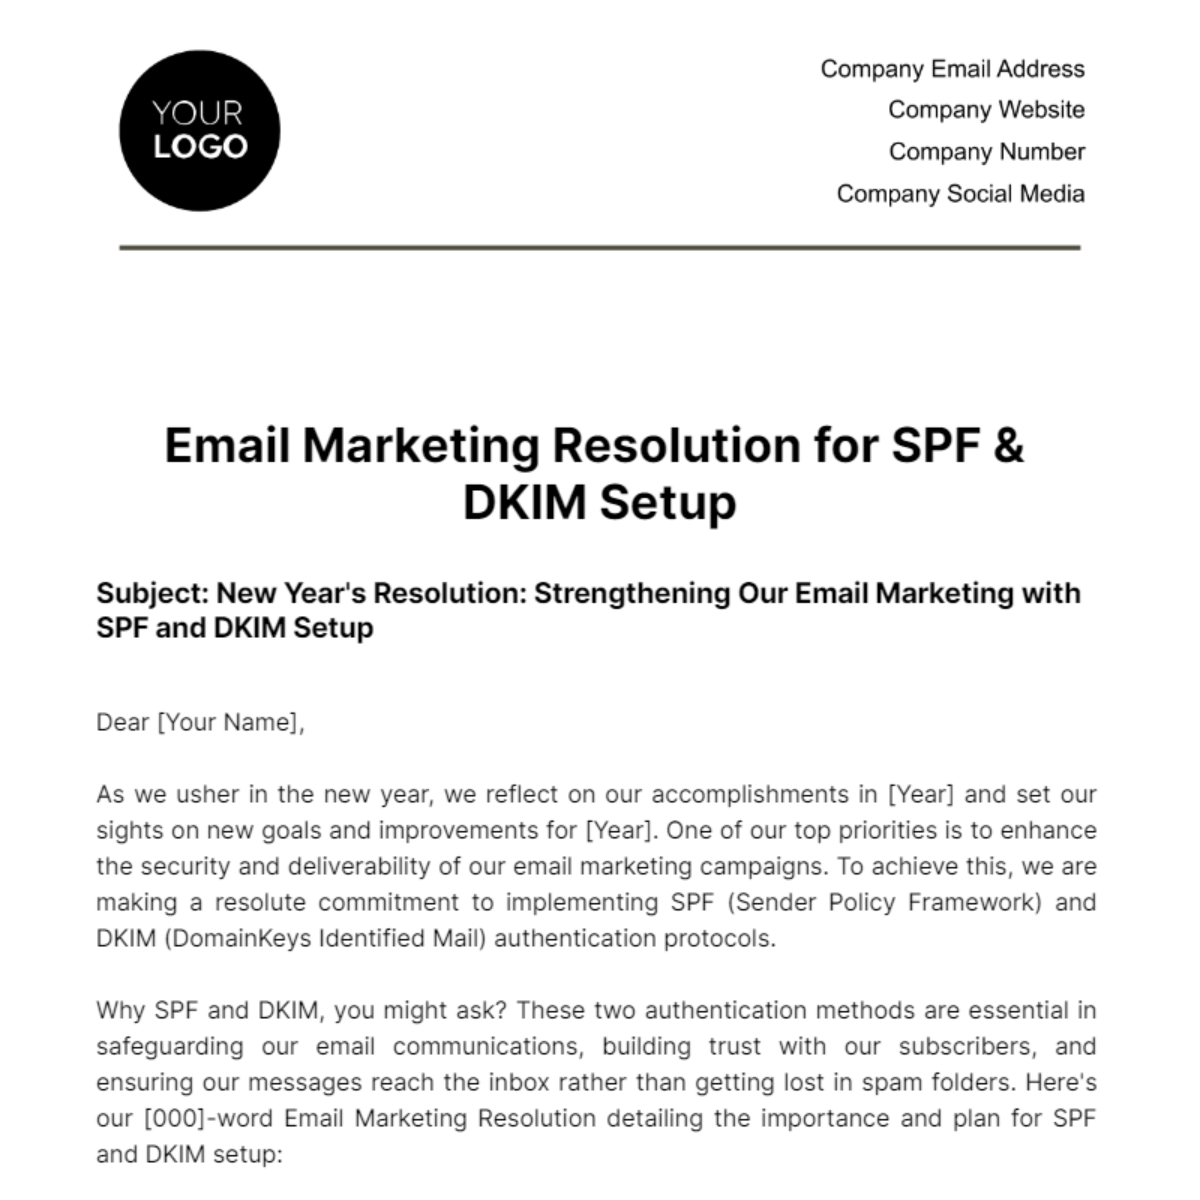 Email Marketing Resolution for SPF & DKIM Setup Template